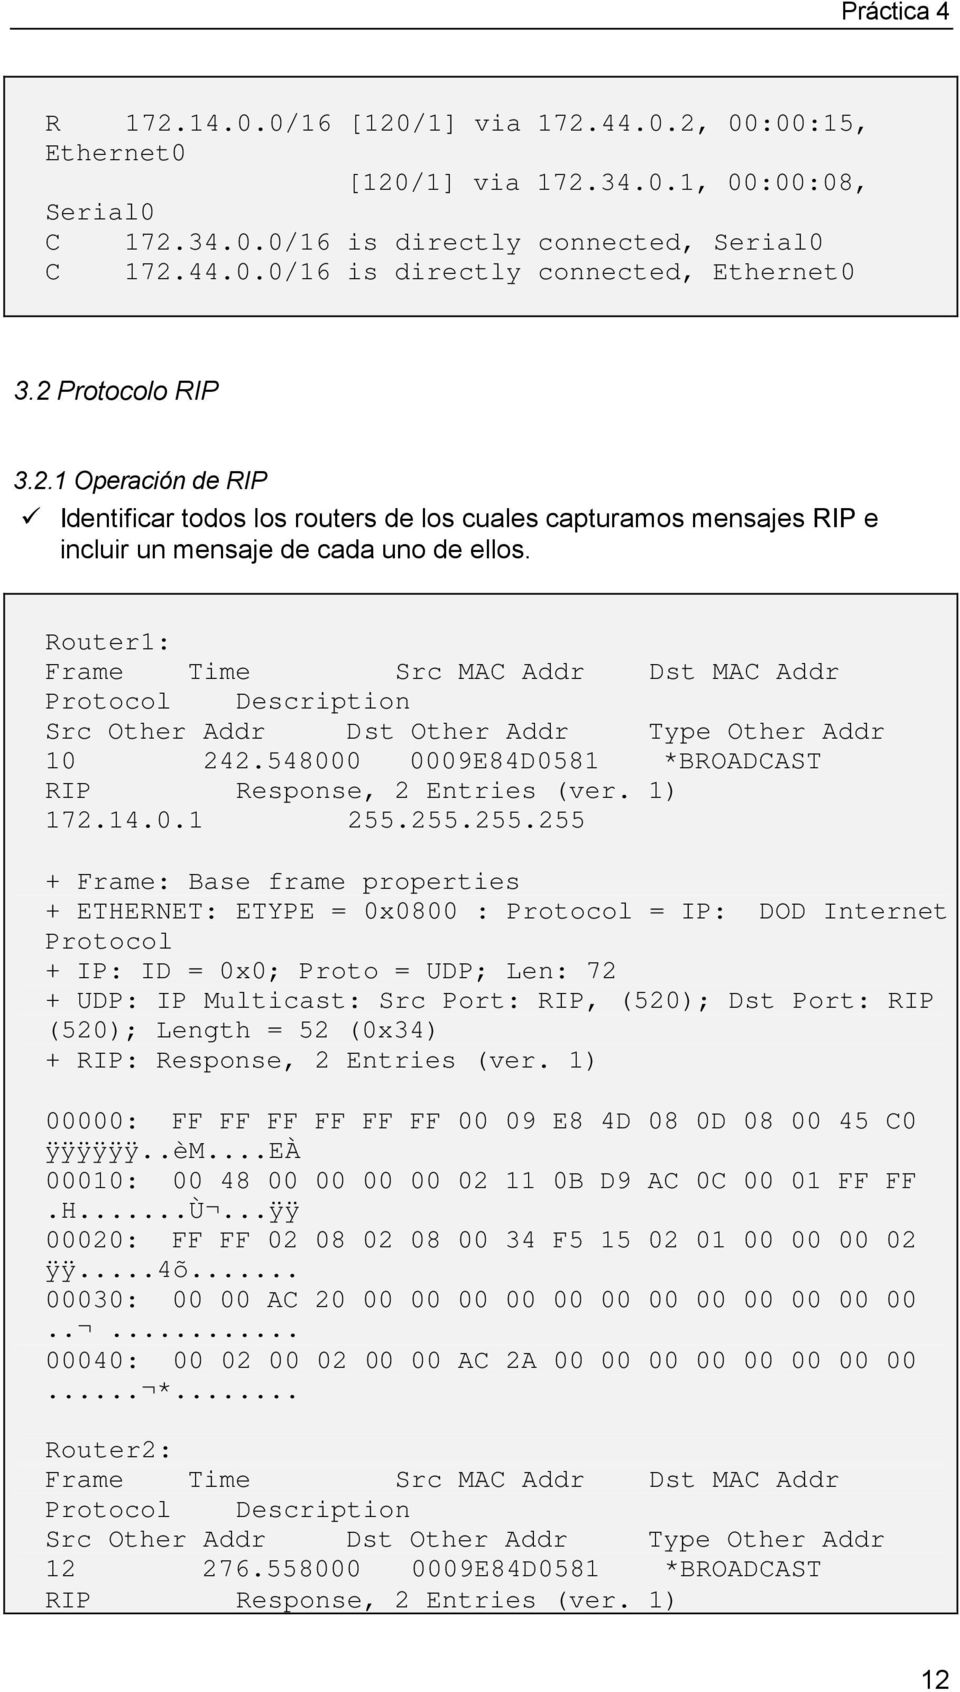 Router1: Frame Time Src MAC Addr Dst MAC Addr Protocol Description Src Other Addr Dst Other Addr Type Other Addr 10 242.548000 0009E84D0581 *BROADCAST RIP Response, 2 Entries (ver. 1) 172.14.0.1 255.